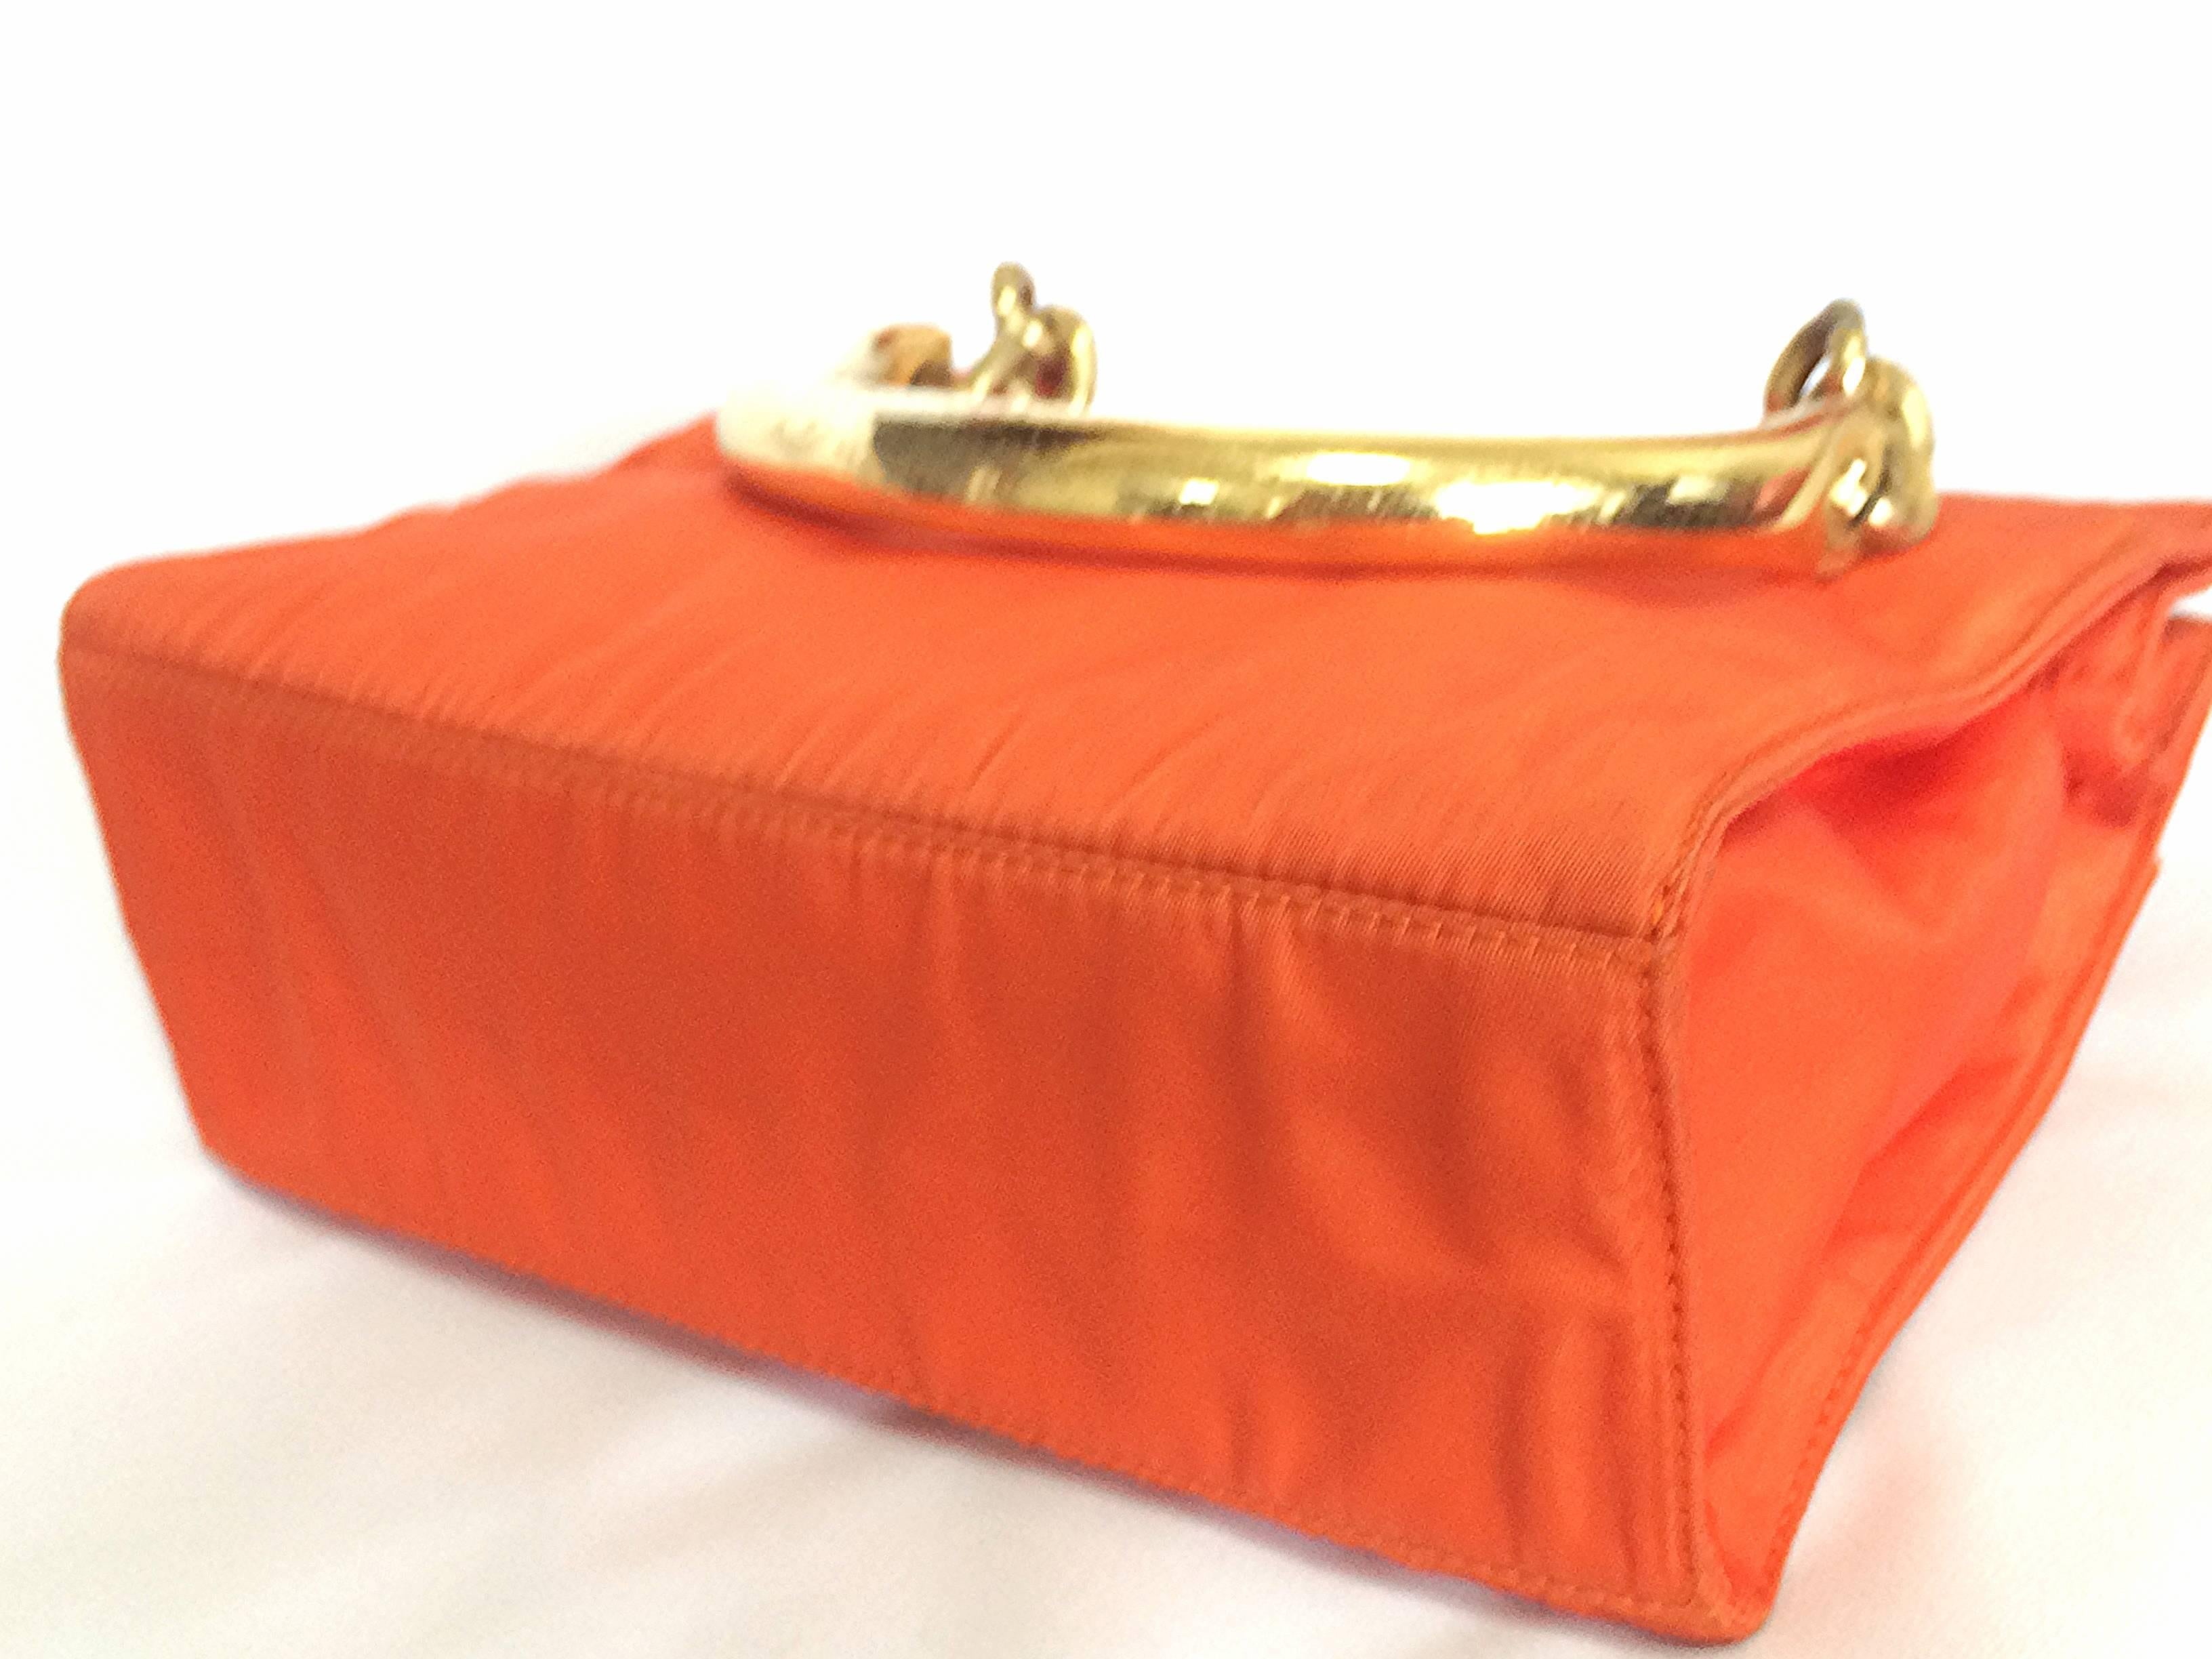 Red Vintage PRADA orange nylon mini tote bag with golden chain and metallic handles.